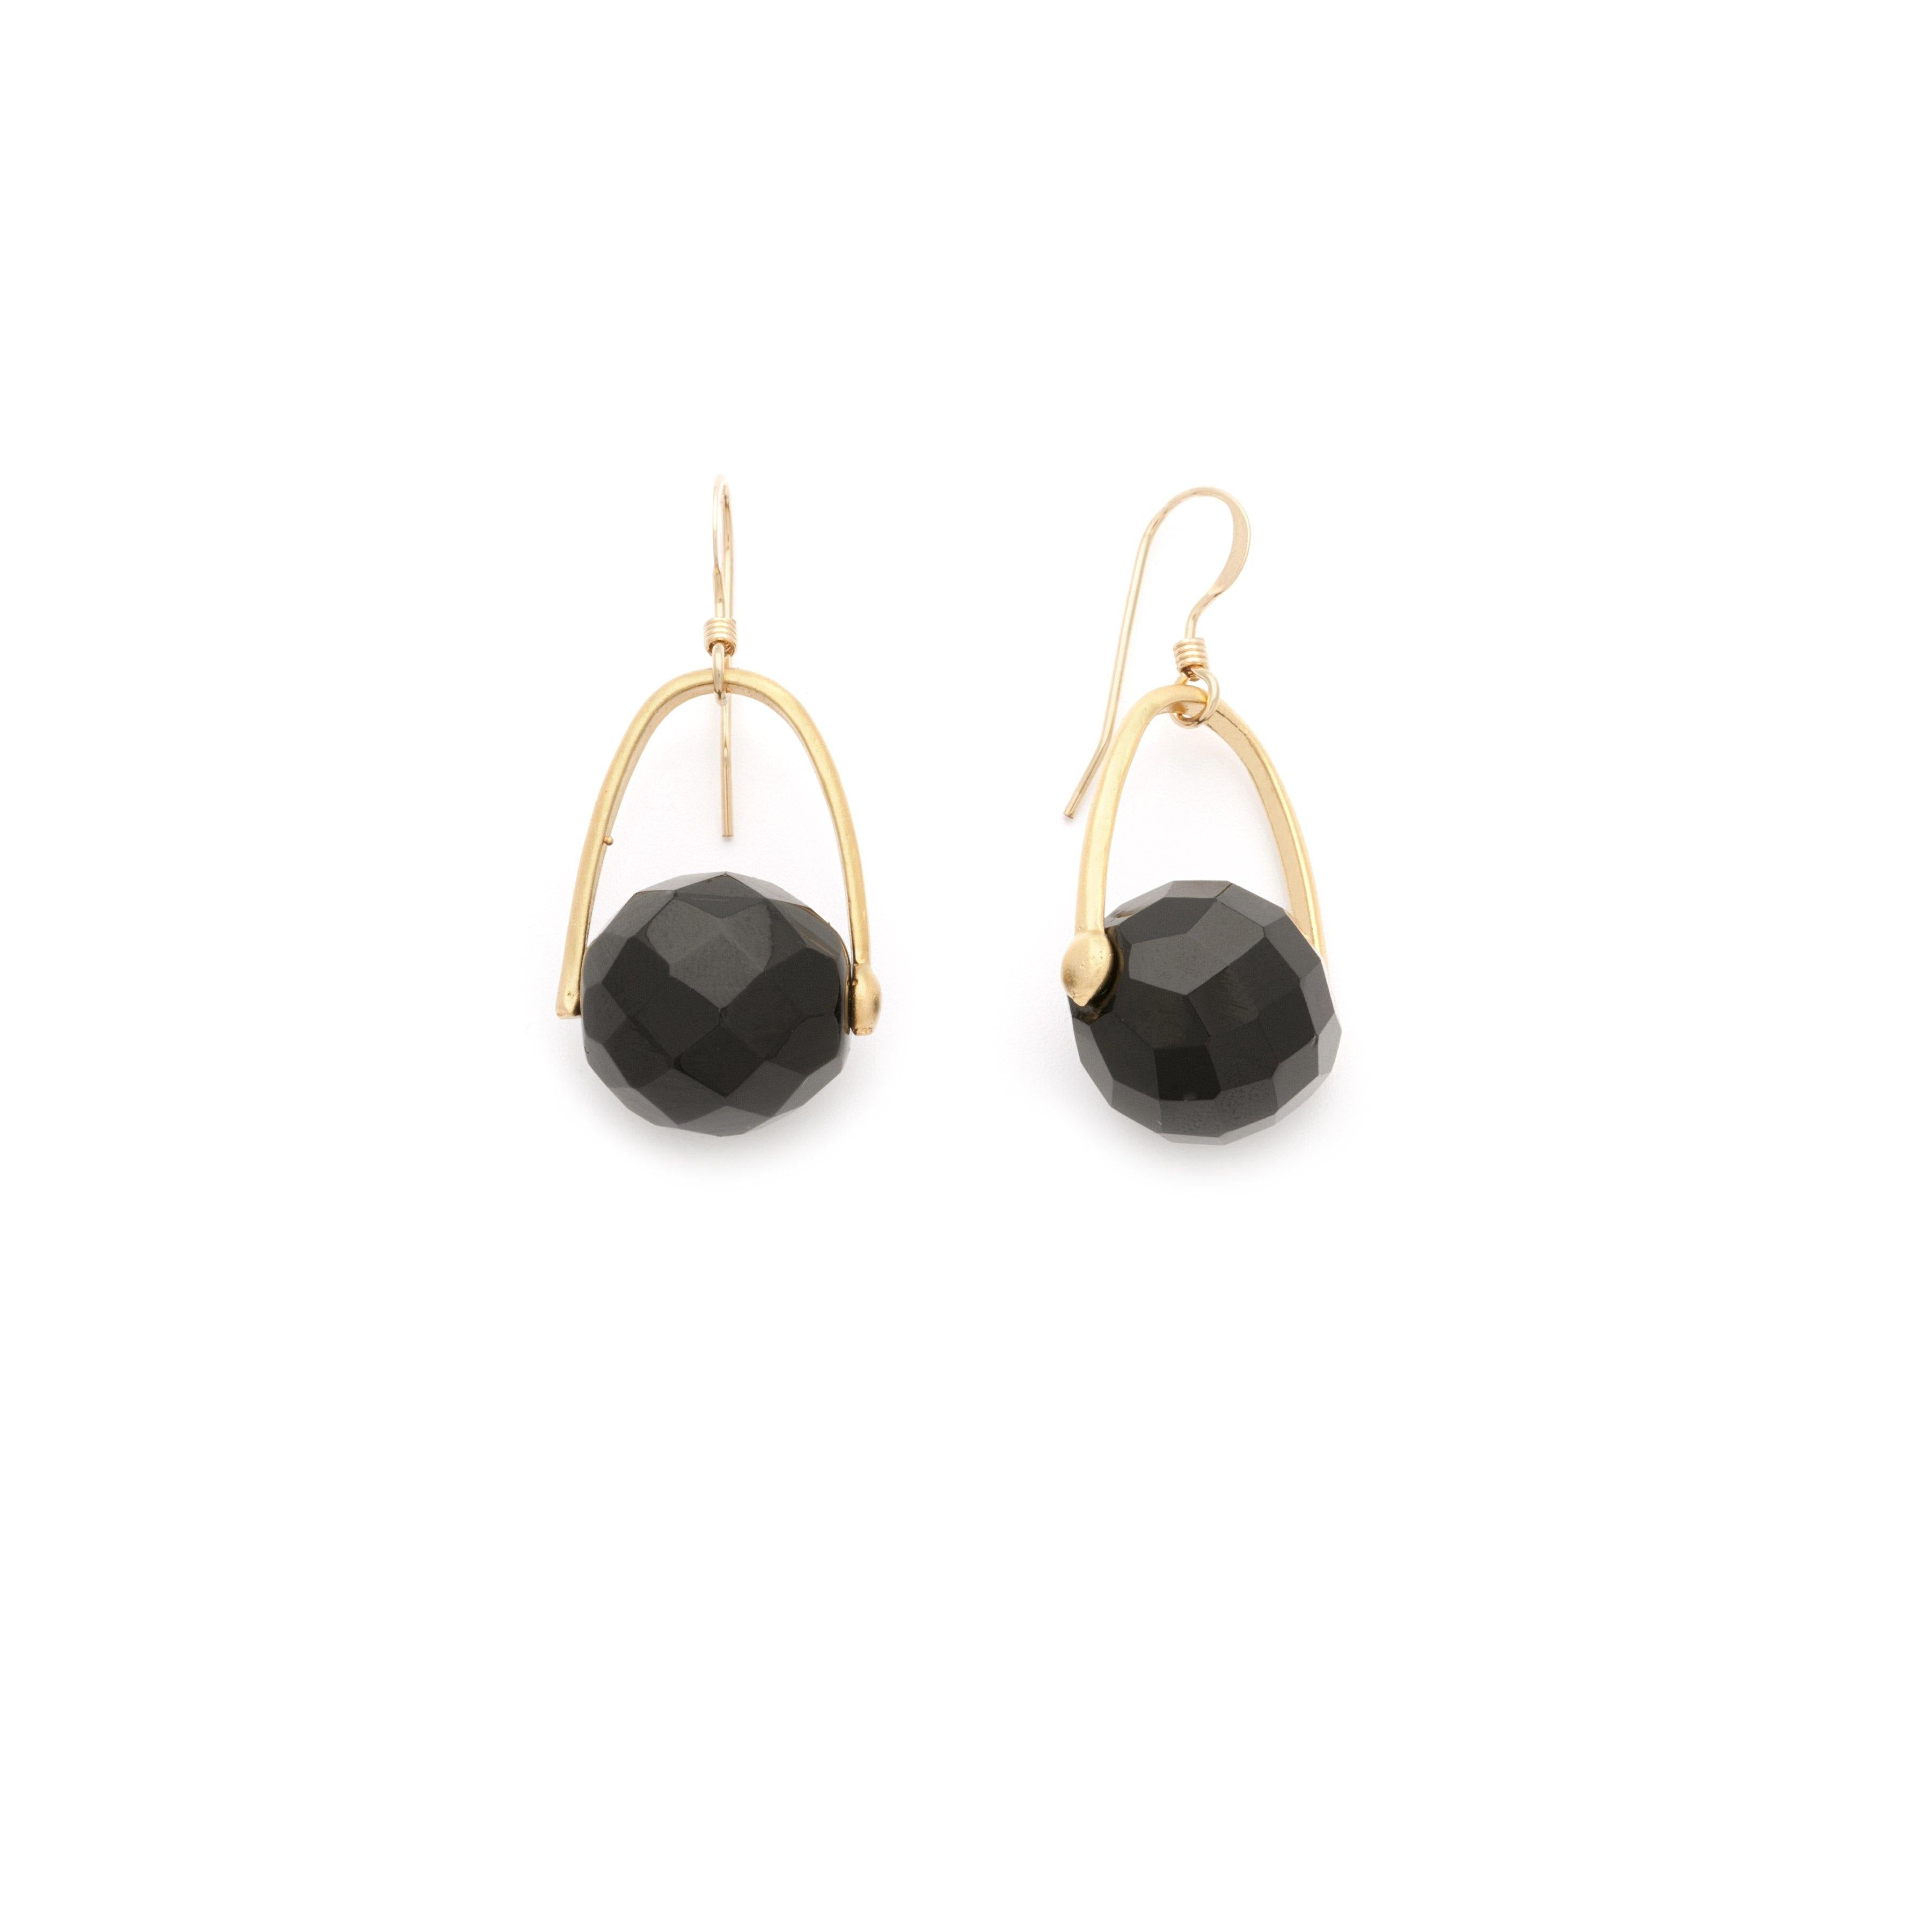 Black Onyx Earrings - Irit Sorokin Designs Jewelry